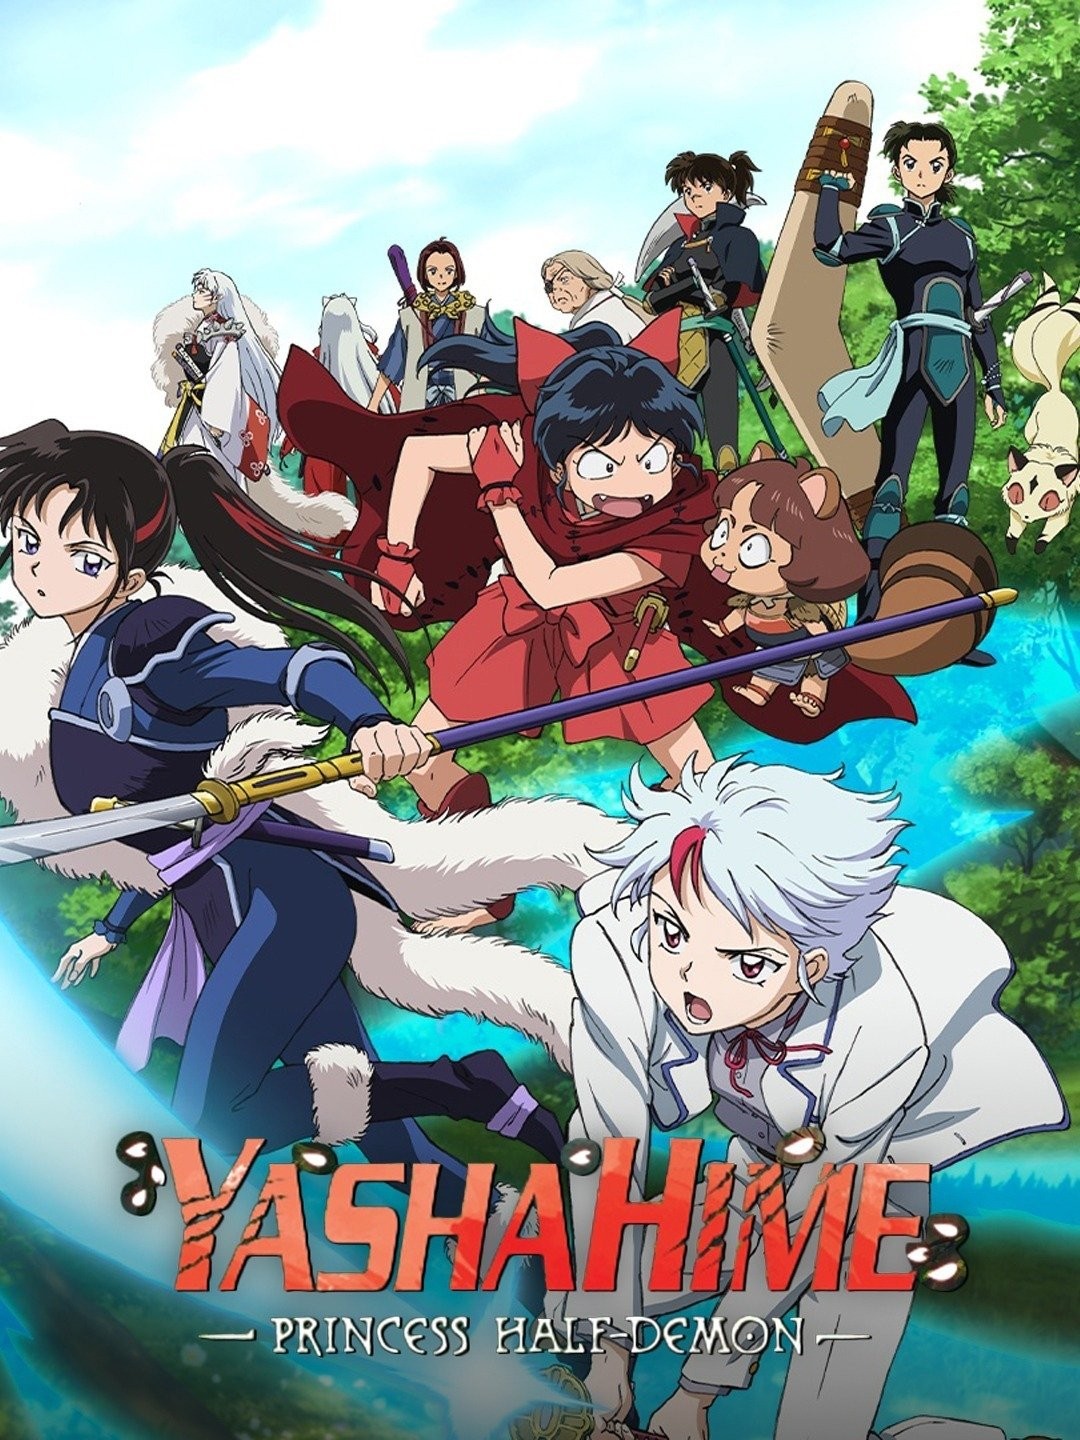 Yashahime: Princess Half-Demon (TV Series 2020– ) - IMDb